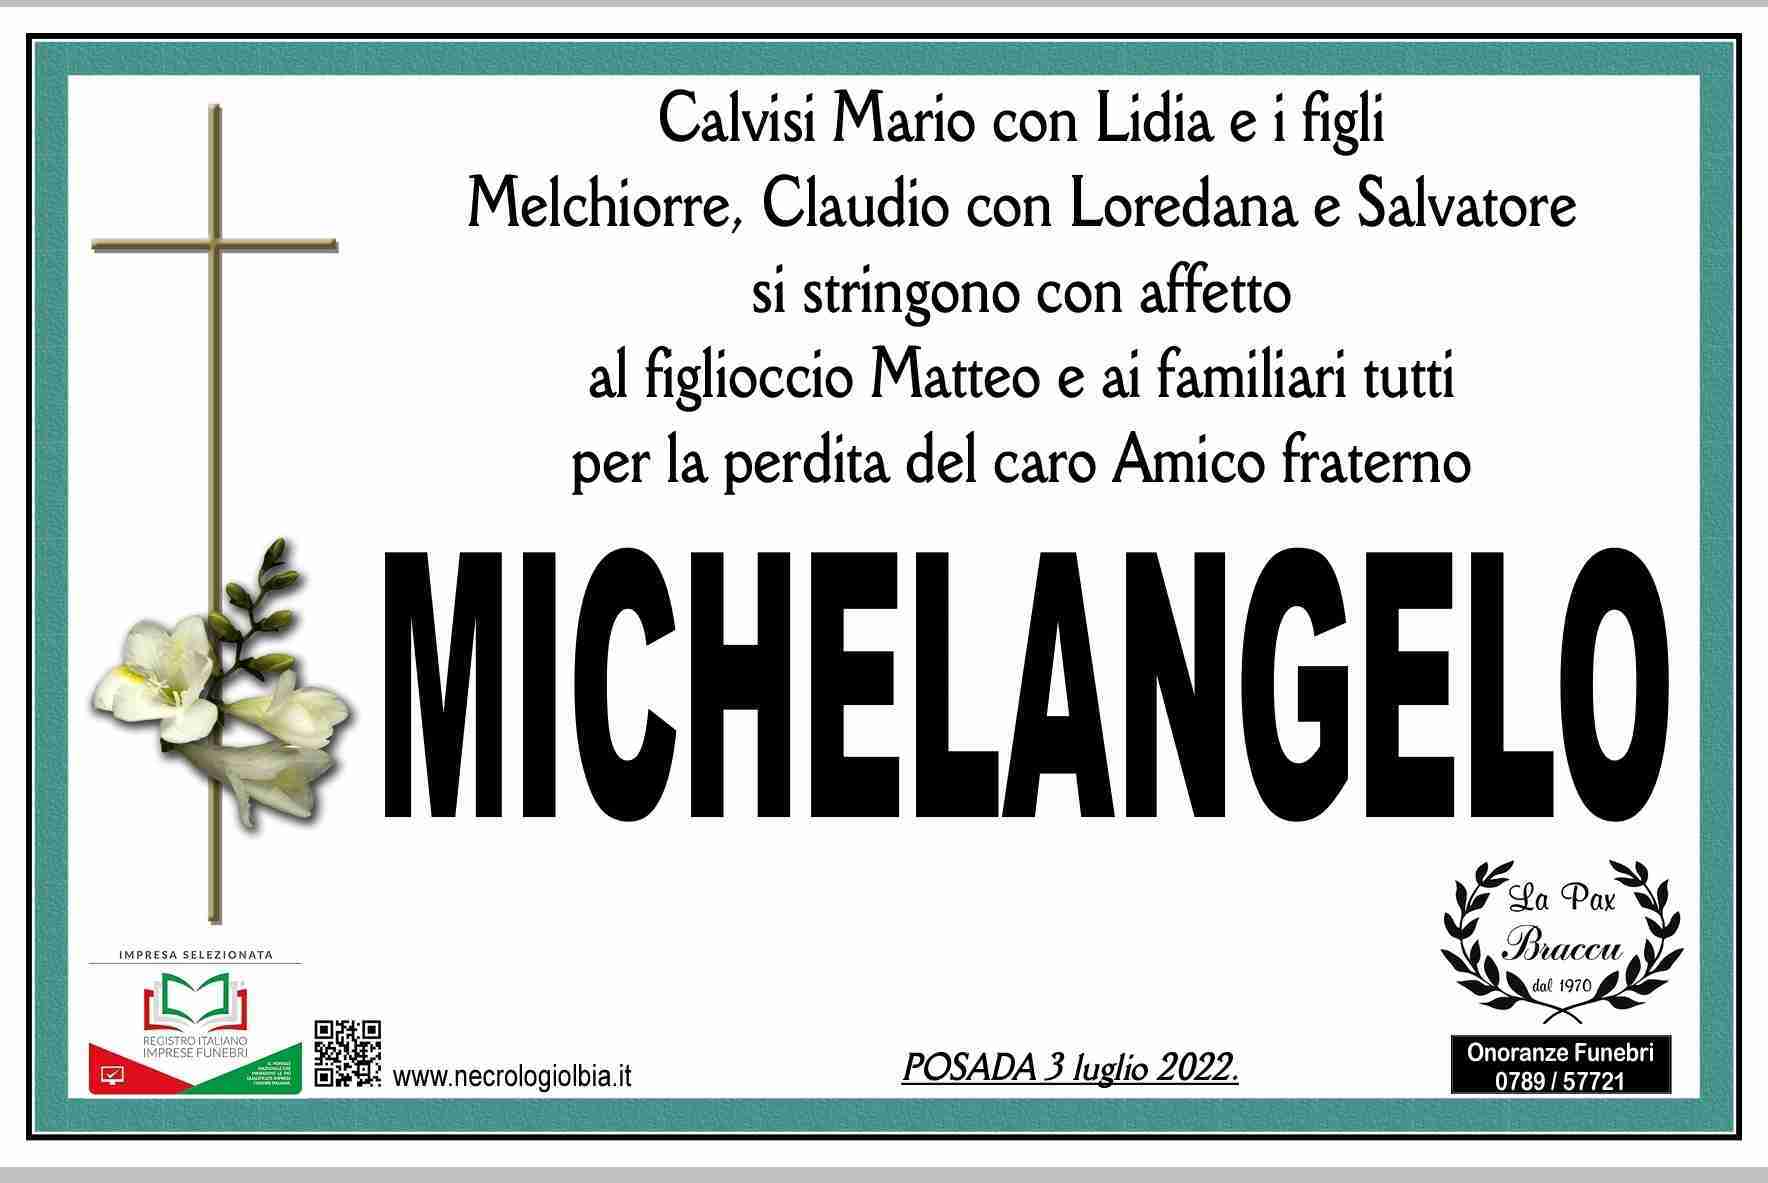 Michelangelo Selis